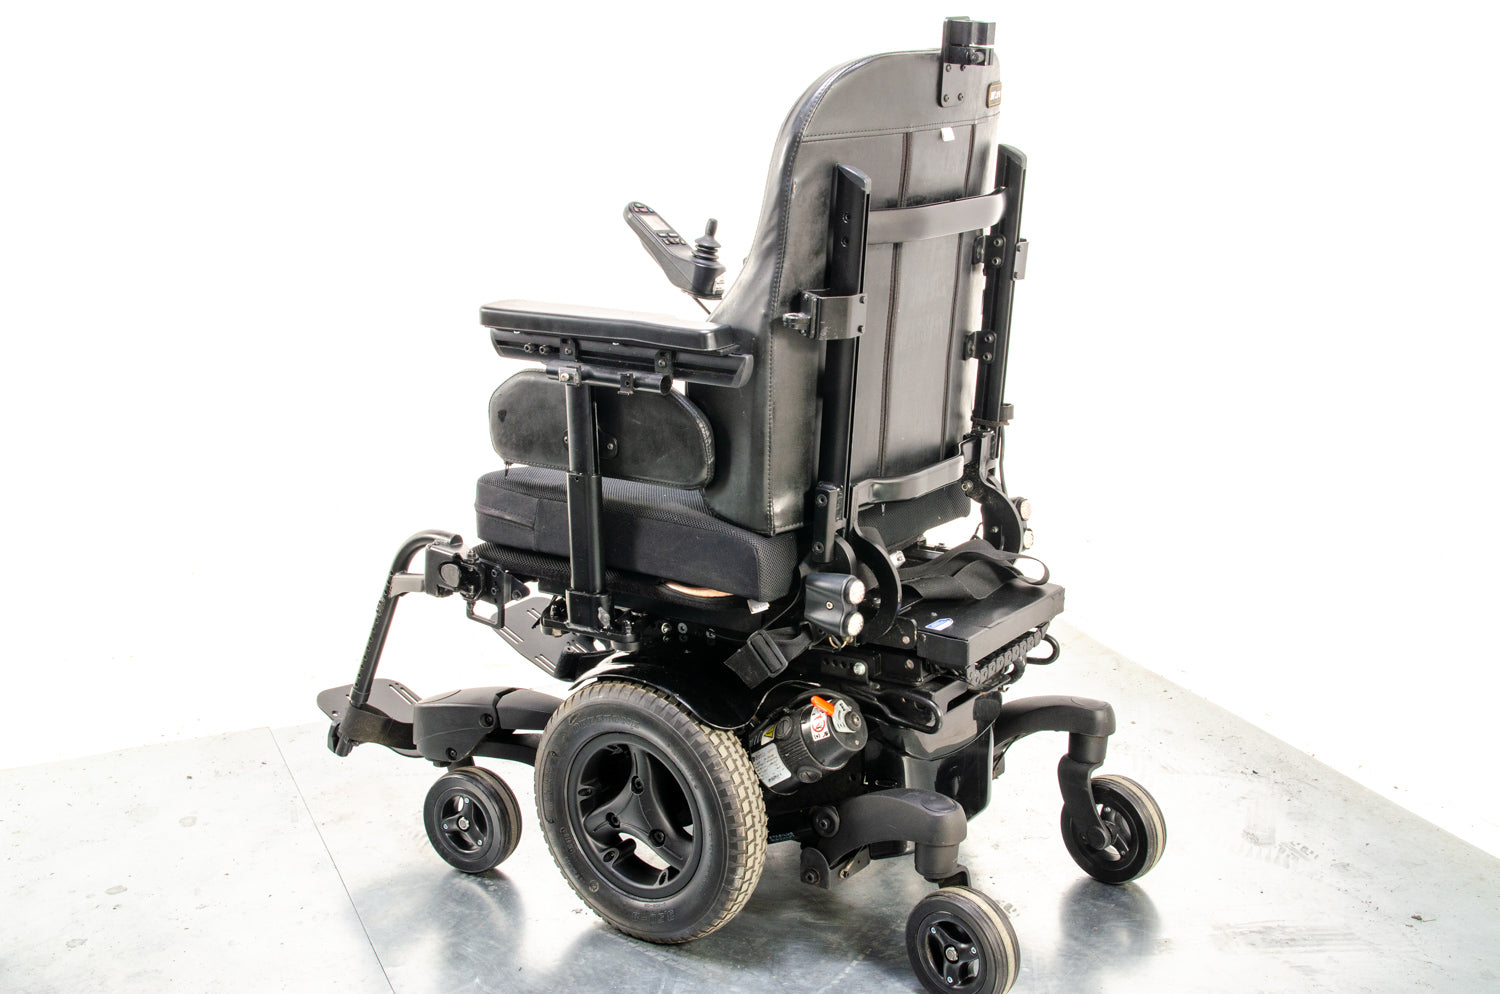 Quickie Jive M Electric Wheelchair Powerchair Riser Tilt Powered Sunrise Medical